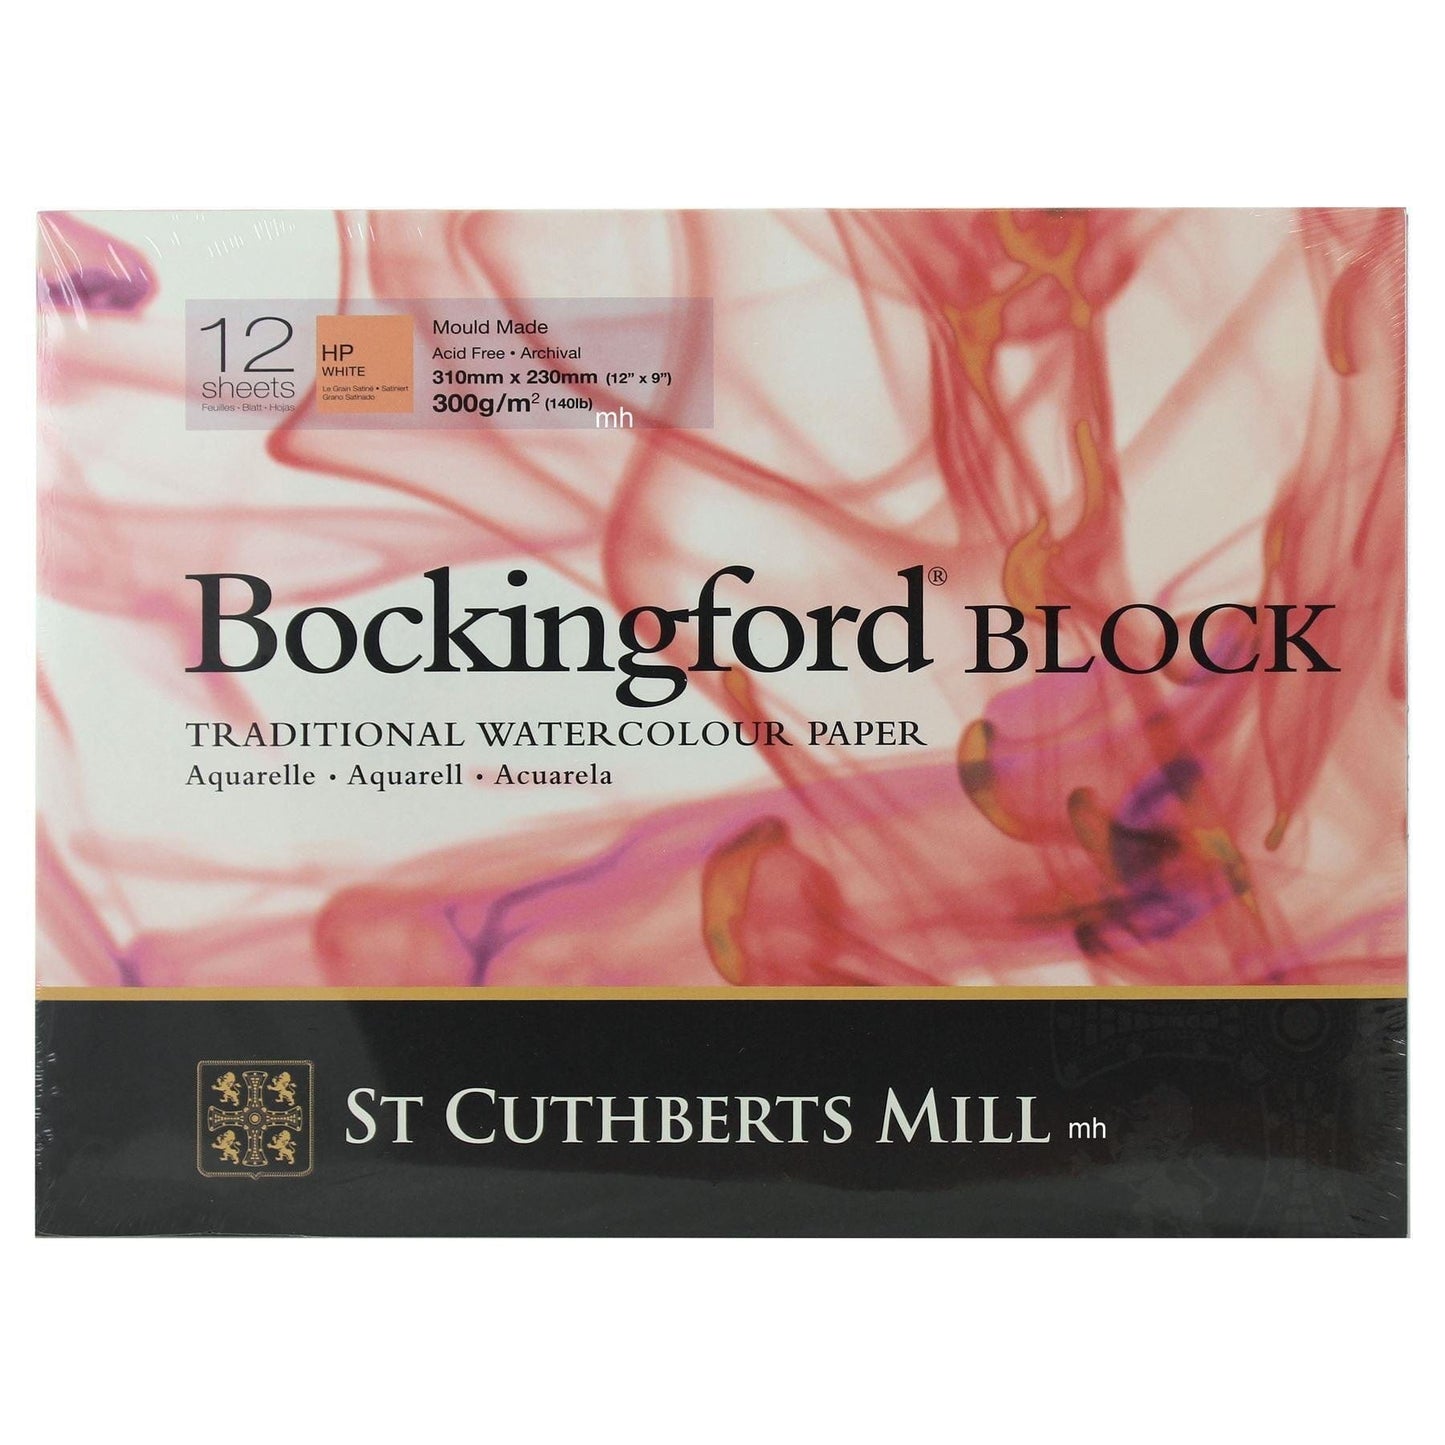 St. Cuthberts Mill Watercolour Pad - Glued Bockingford - Watercolour Pad - Hot Press - 140lb - 12x9" - Item #45330001011C